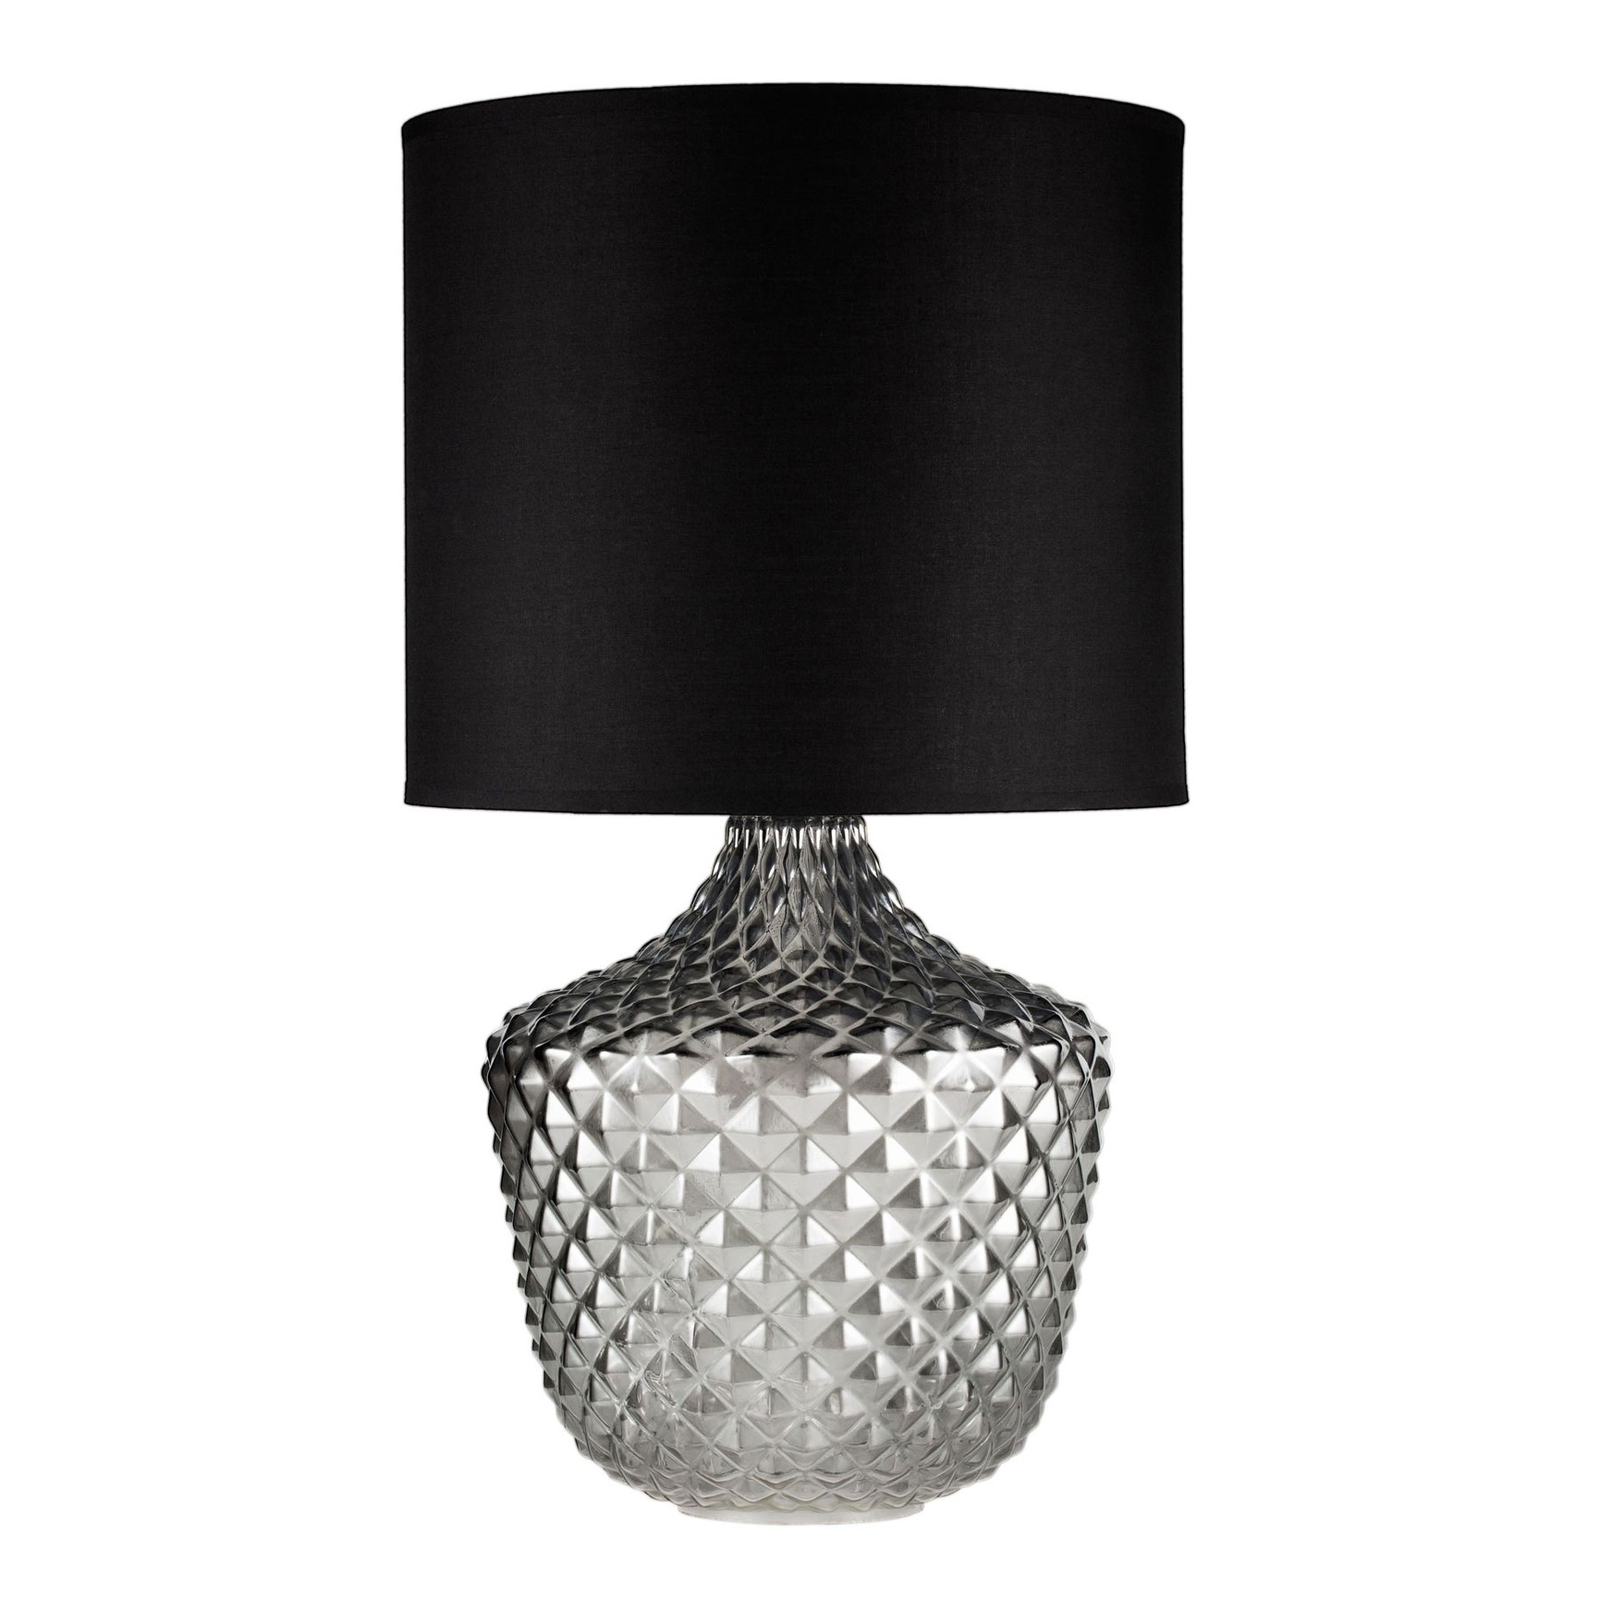 Pauleen Brilliant Jewel bordlampe med glassfot